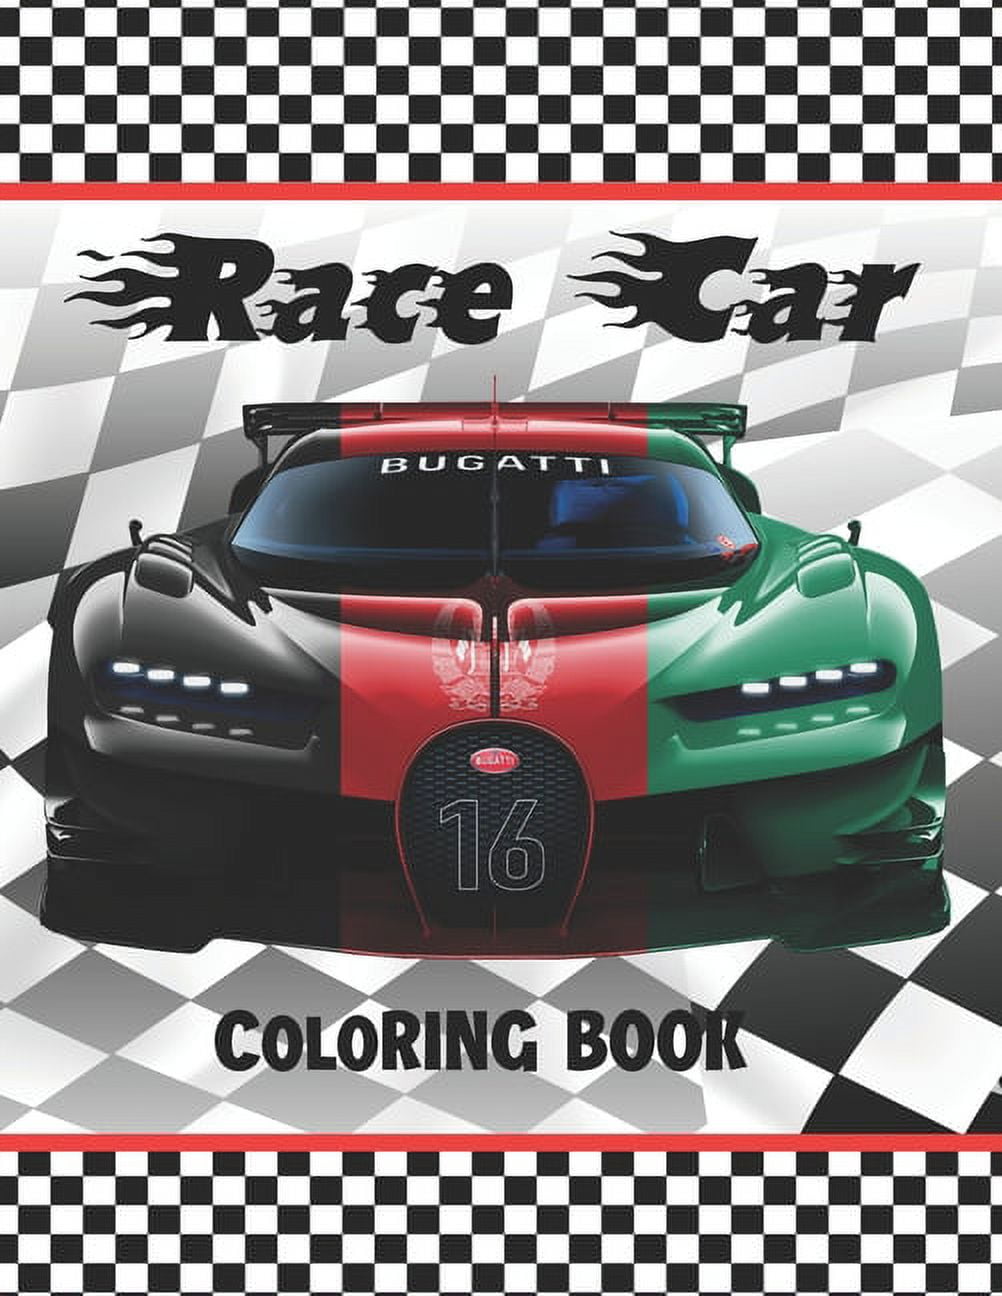 Race car coloring book a collection of amazing sport supercars cars featuring bugatti lamborghini porsche ferrari etc